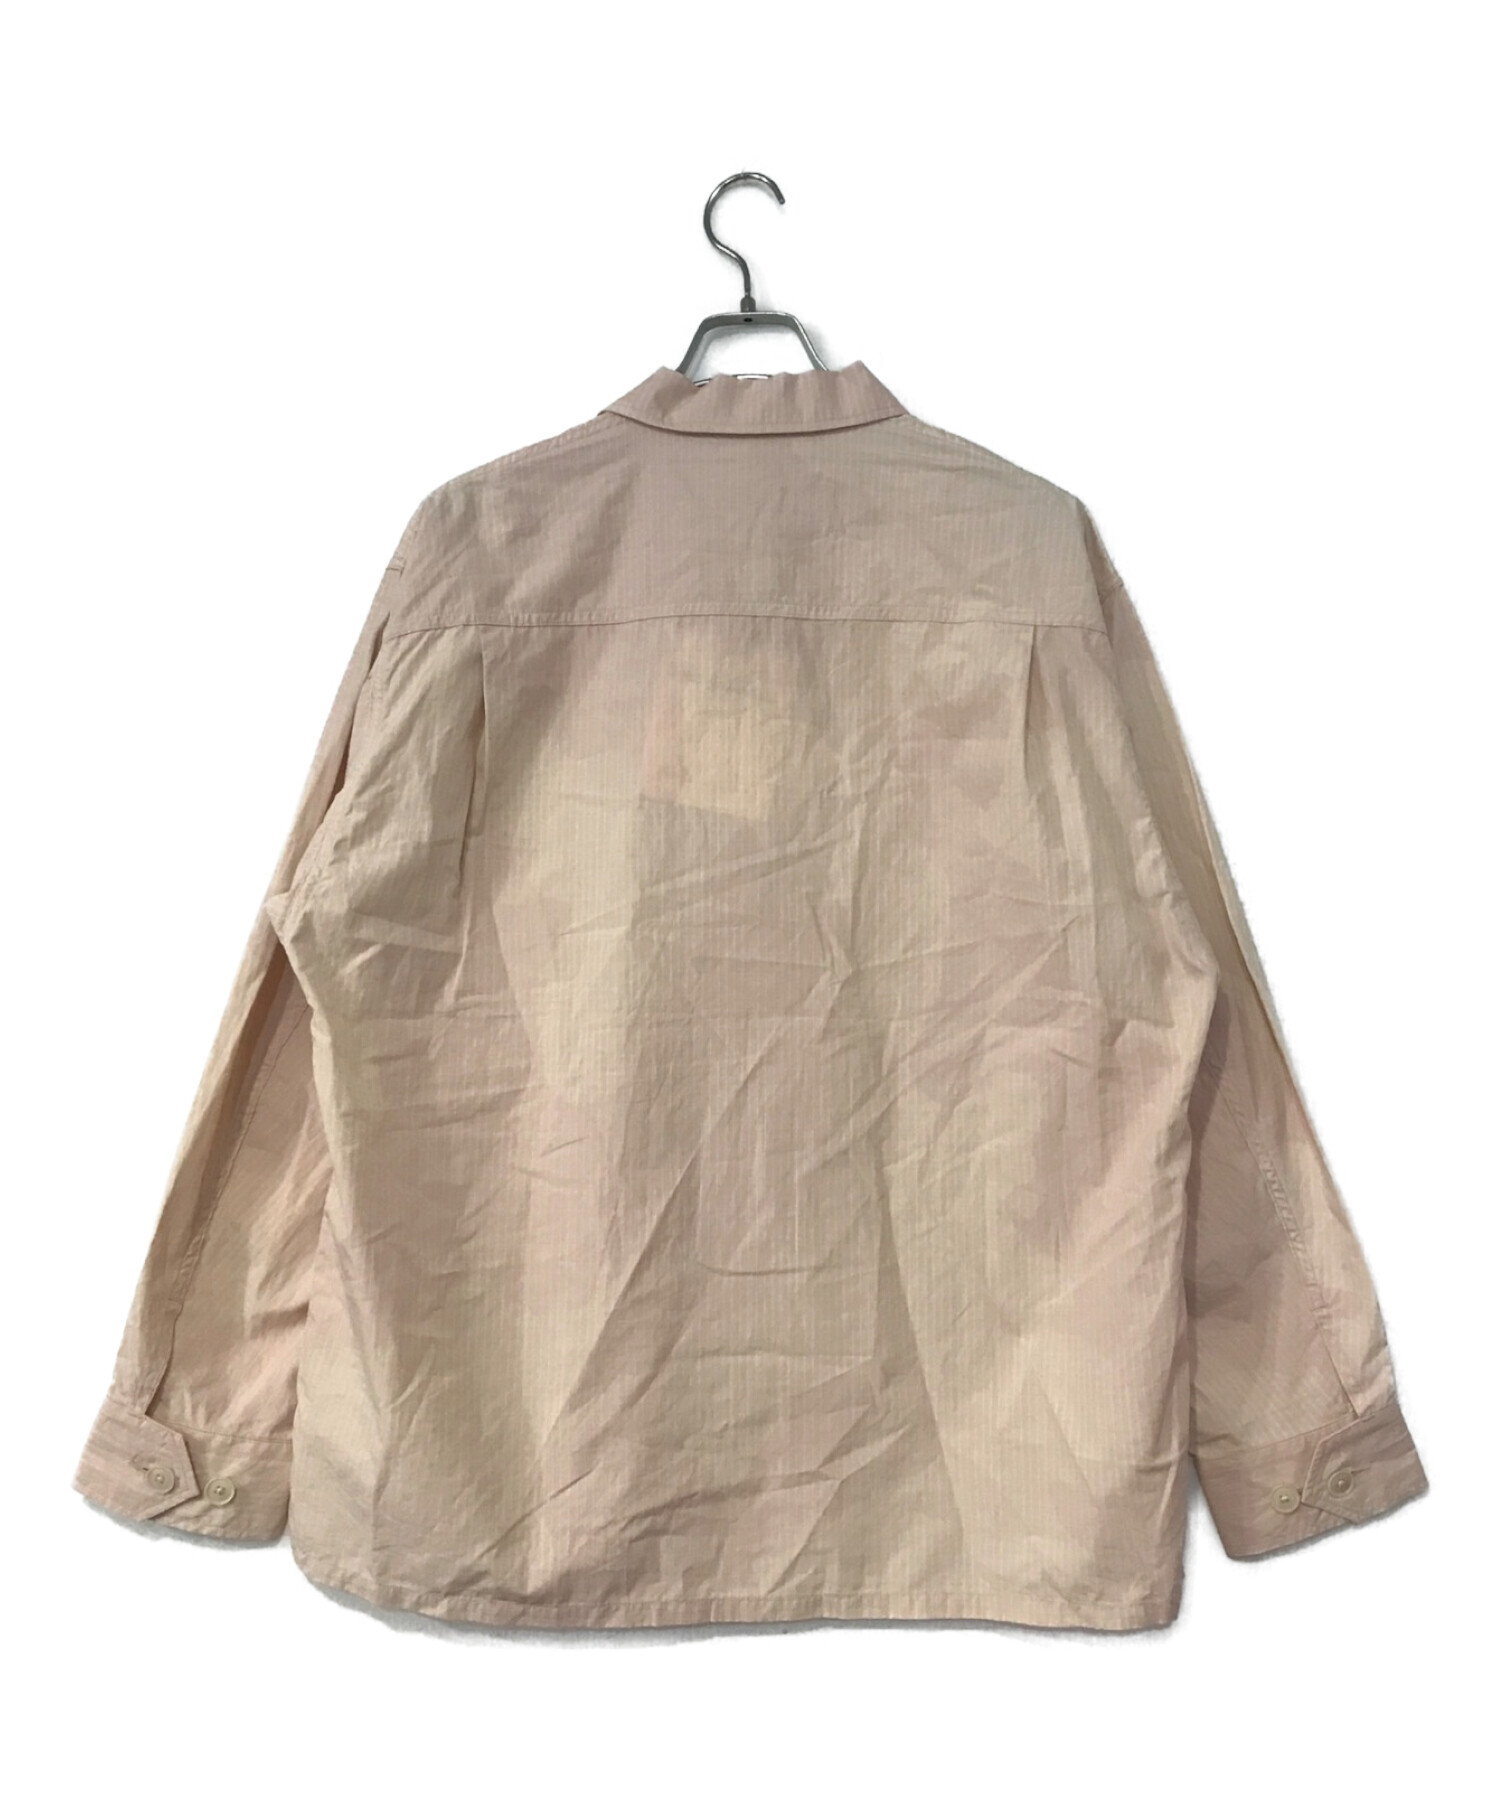 KAPTAIN SUNSHINE (キャプテンサンシャイン) Fatigue Jacket ピンク サイズ:38